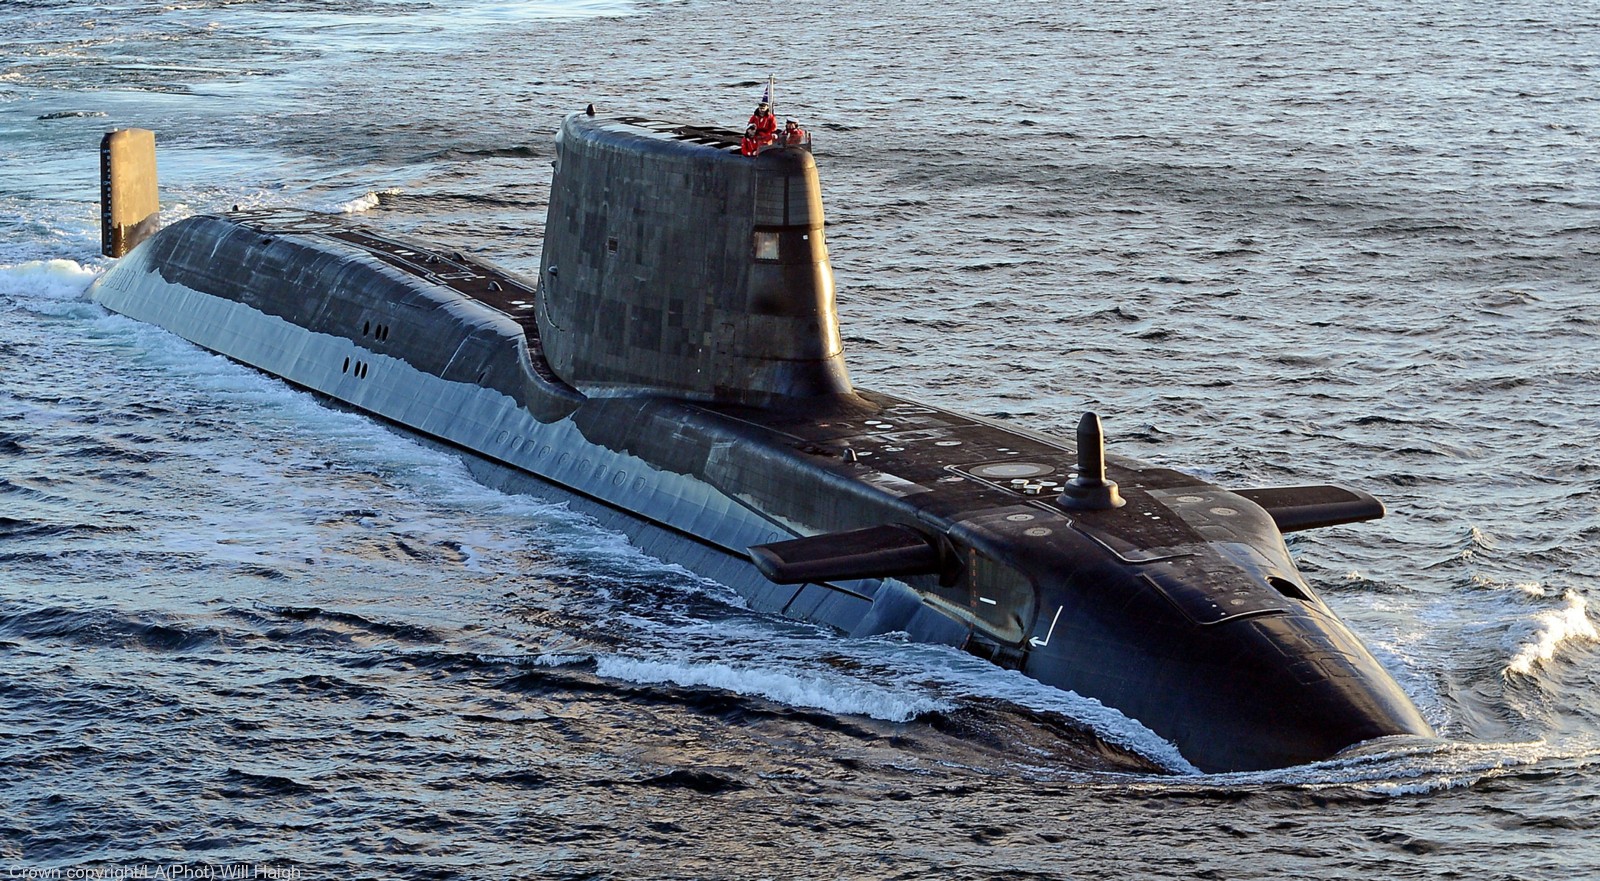 s120 hms ambush s-120 astute class attack submarine ssn hunter killer royal navy 06